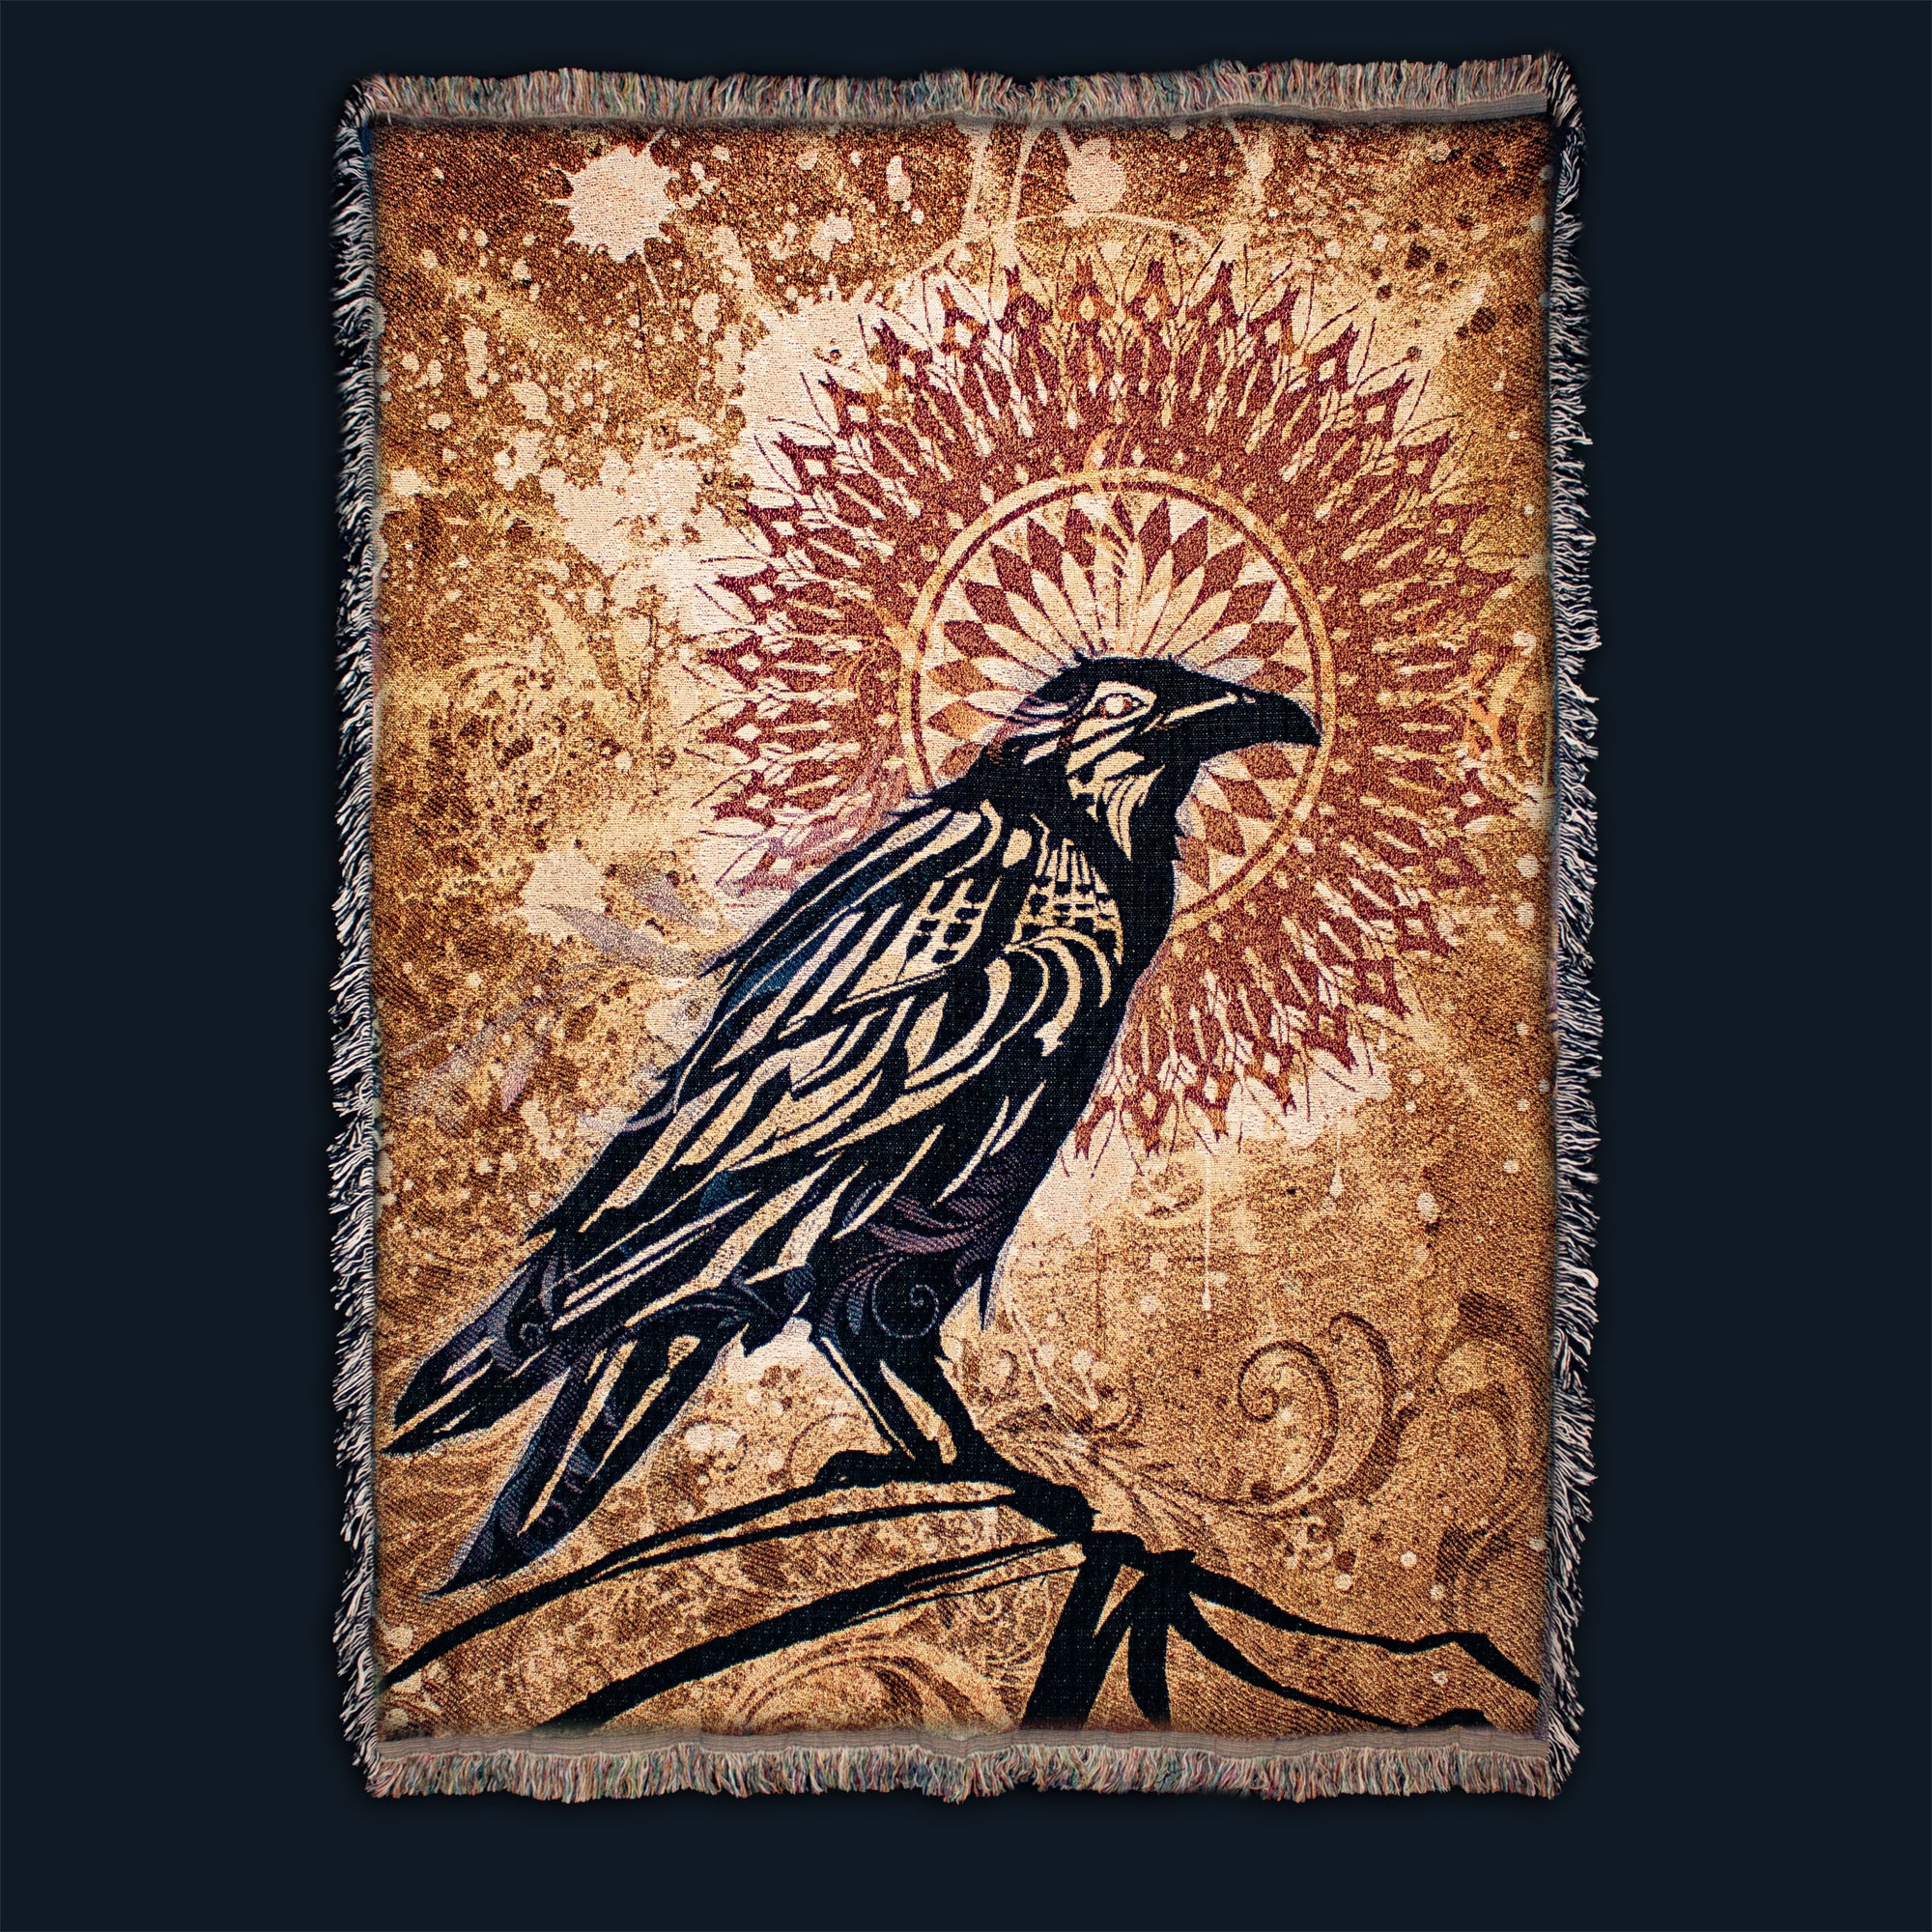 Raven Magic - Woven Blanket